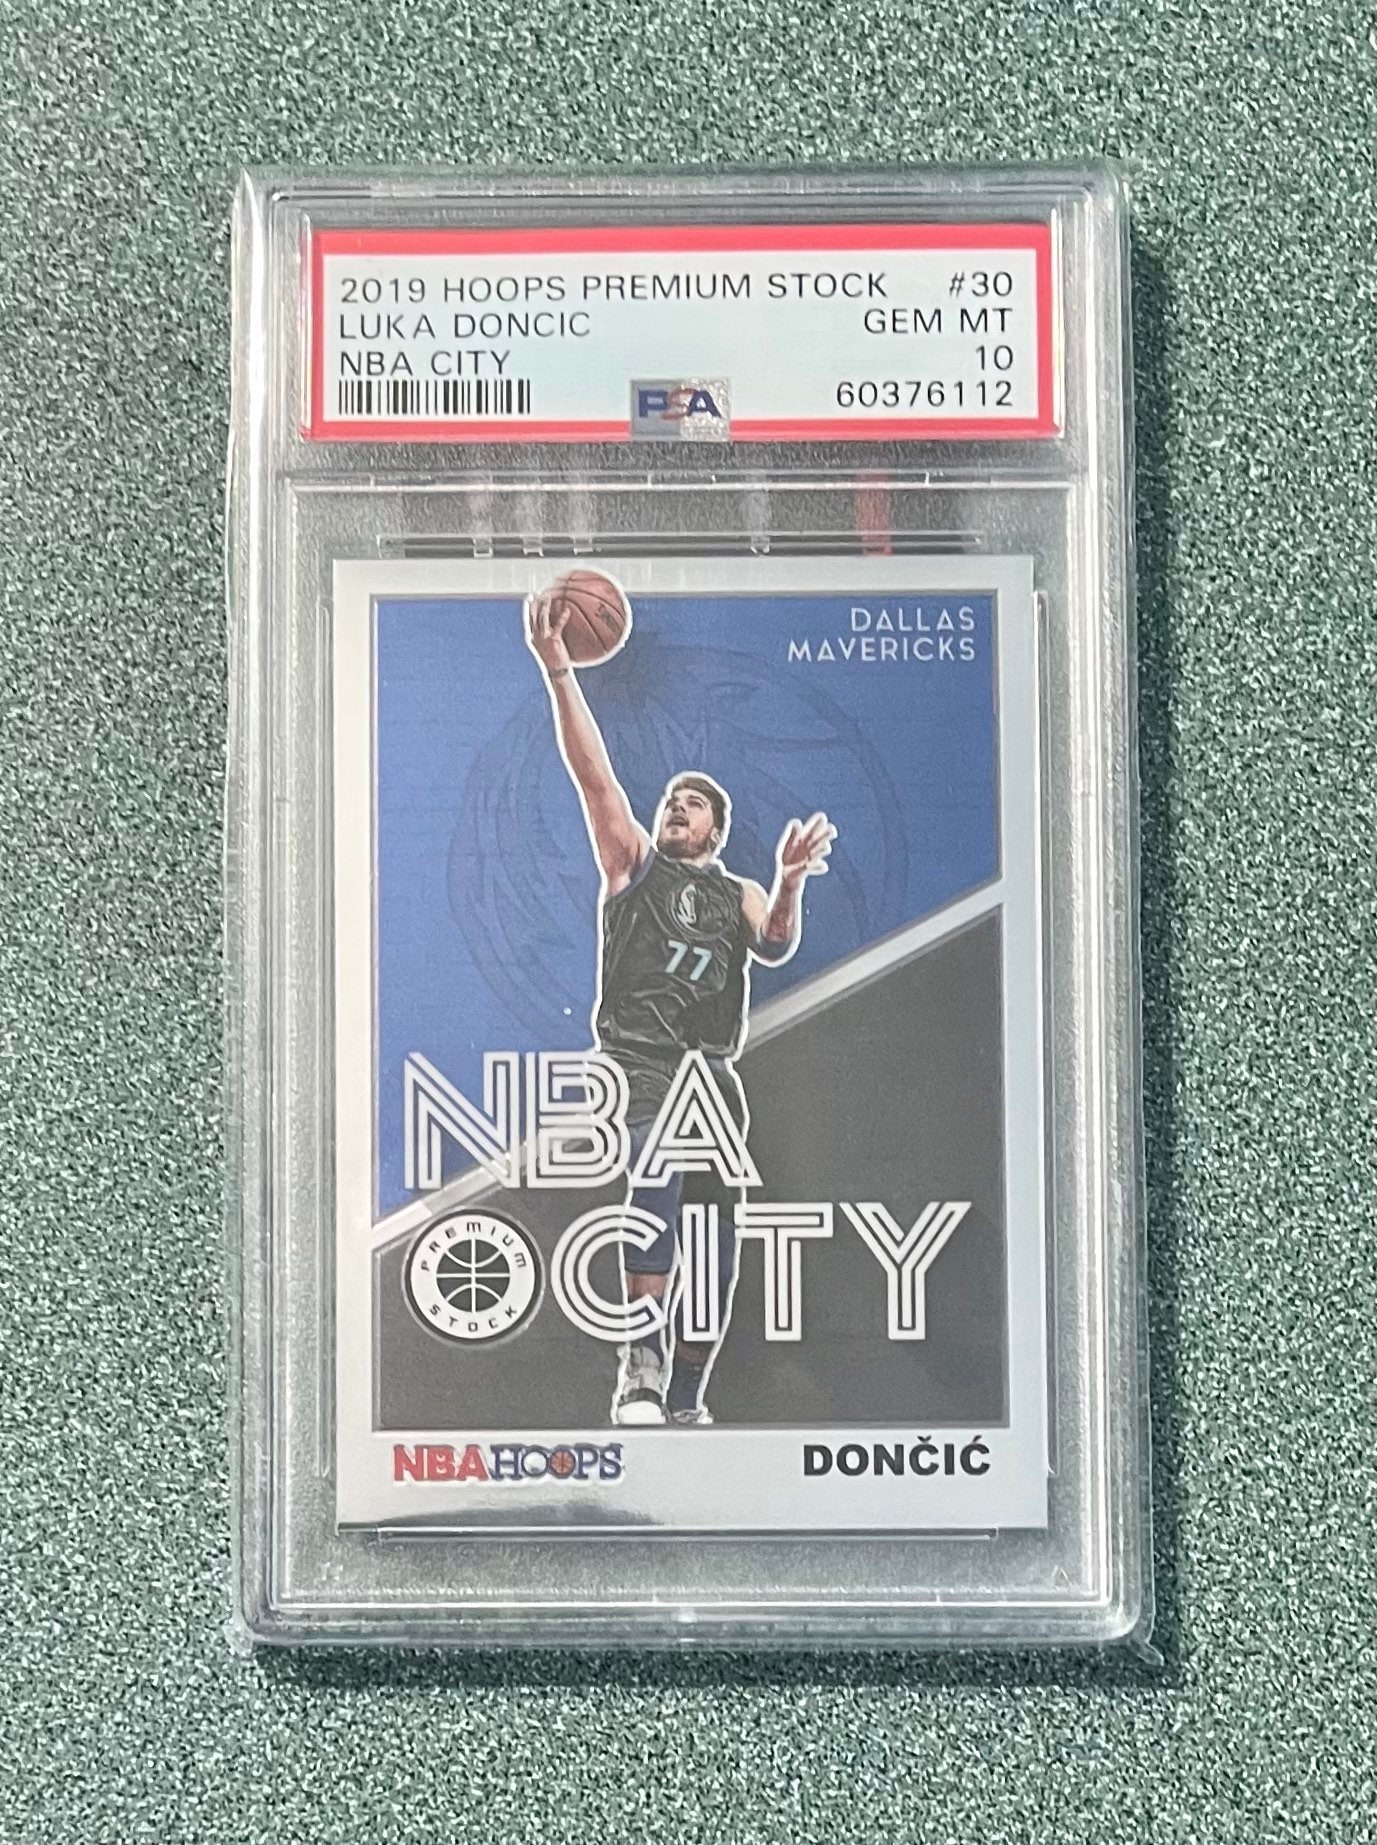 Luka Doncic 2019 Hoops Premium Stock NBA City PSA 10 Gem Mint